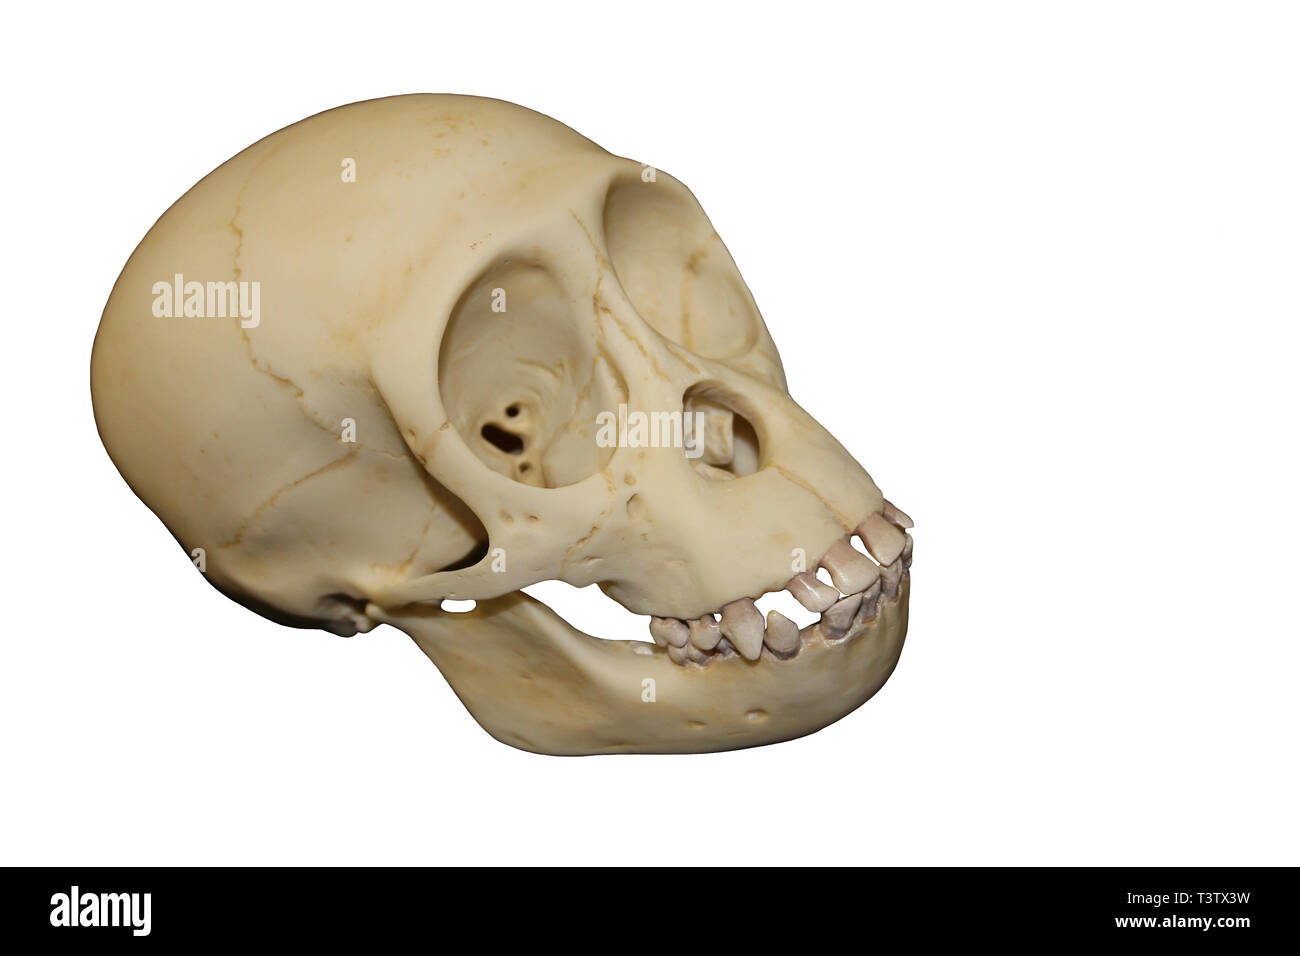 Young Chimpanzee Skull Stock Photo